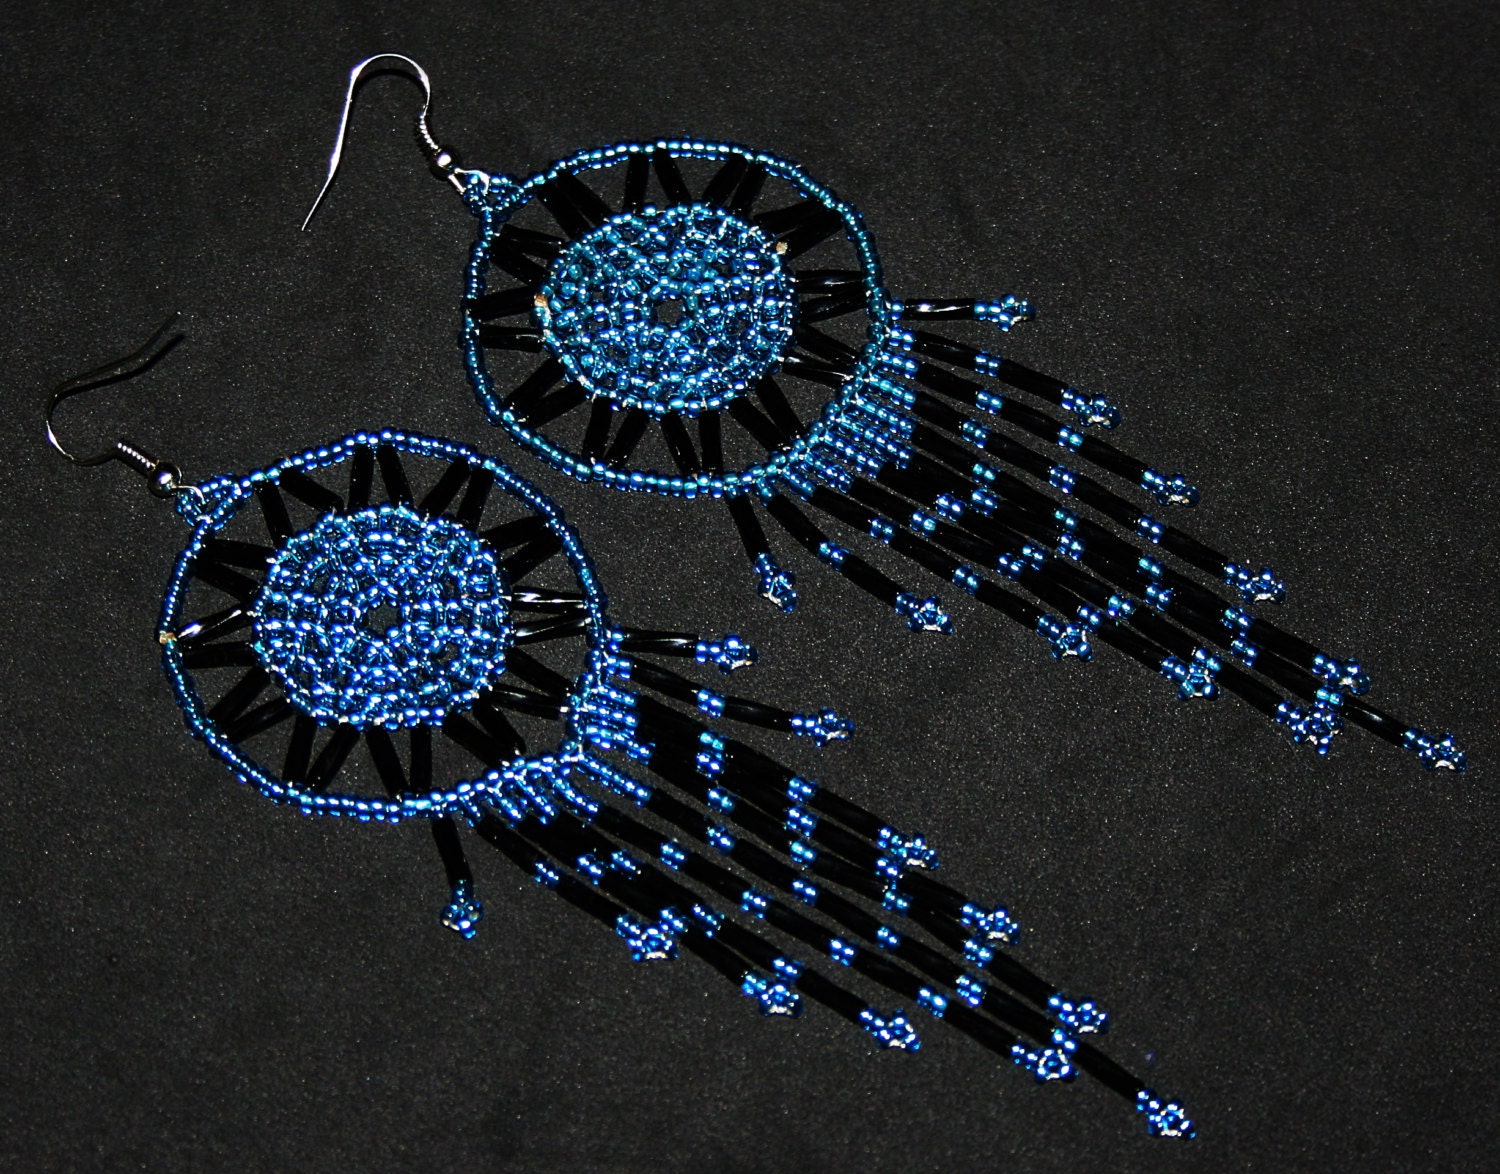 Details about   DREAM CATCHER Native American EARRINGS TURQUOISE BLUE BLACK CROCHET 6cm HOOP new 